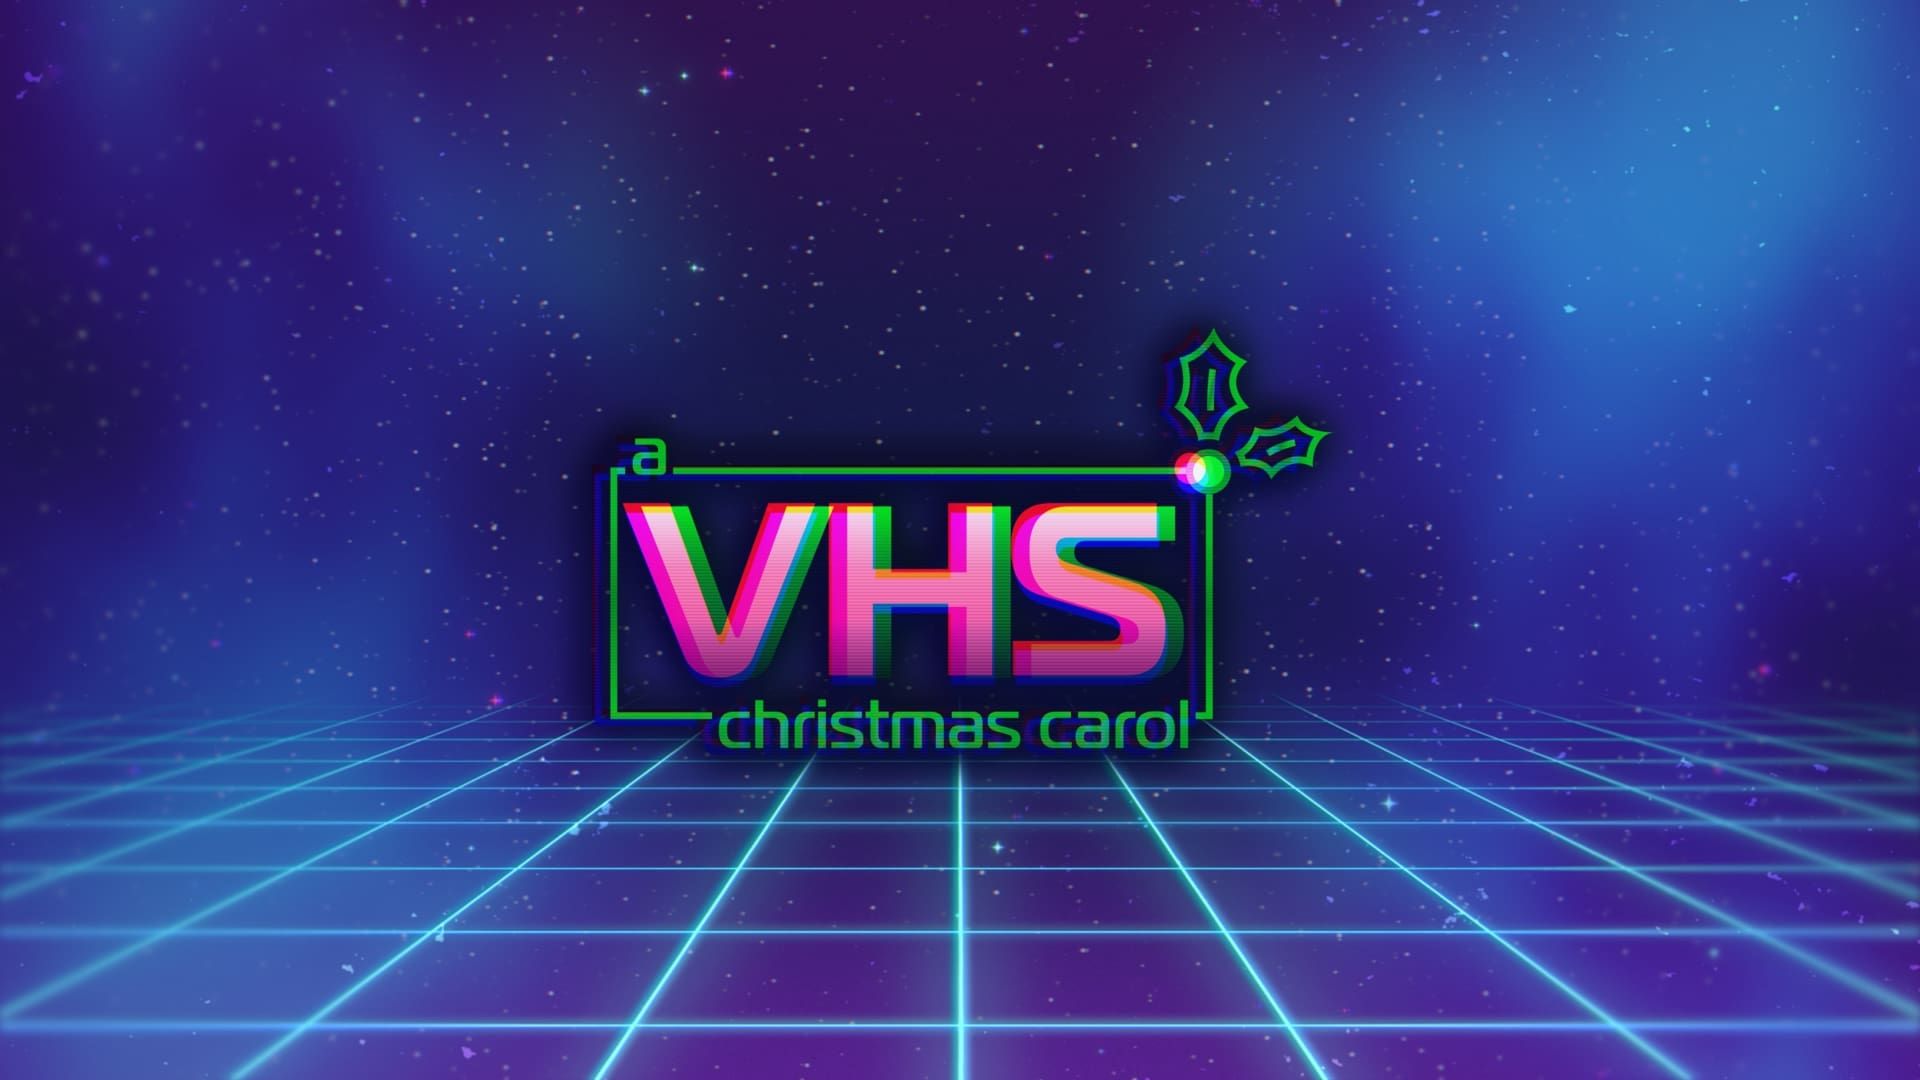 A VHS Christmas Carol background